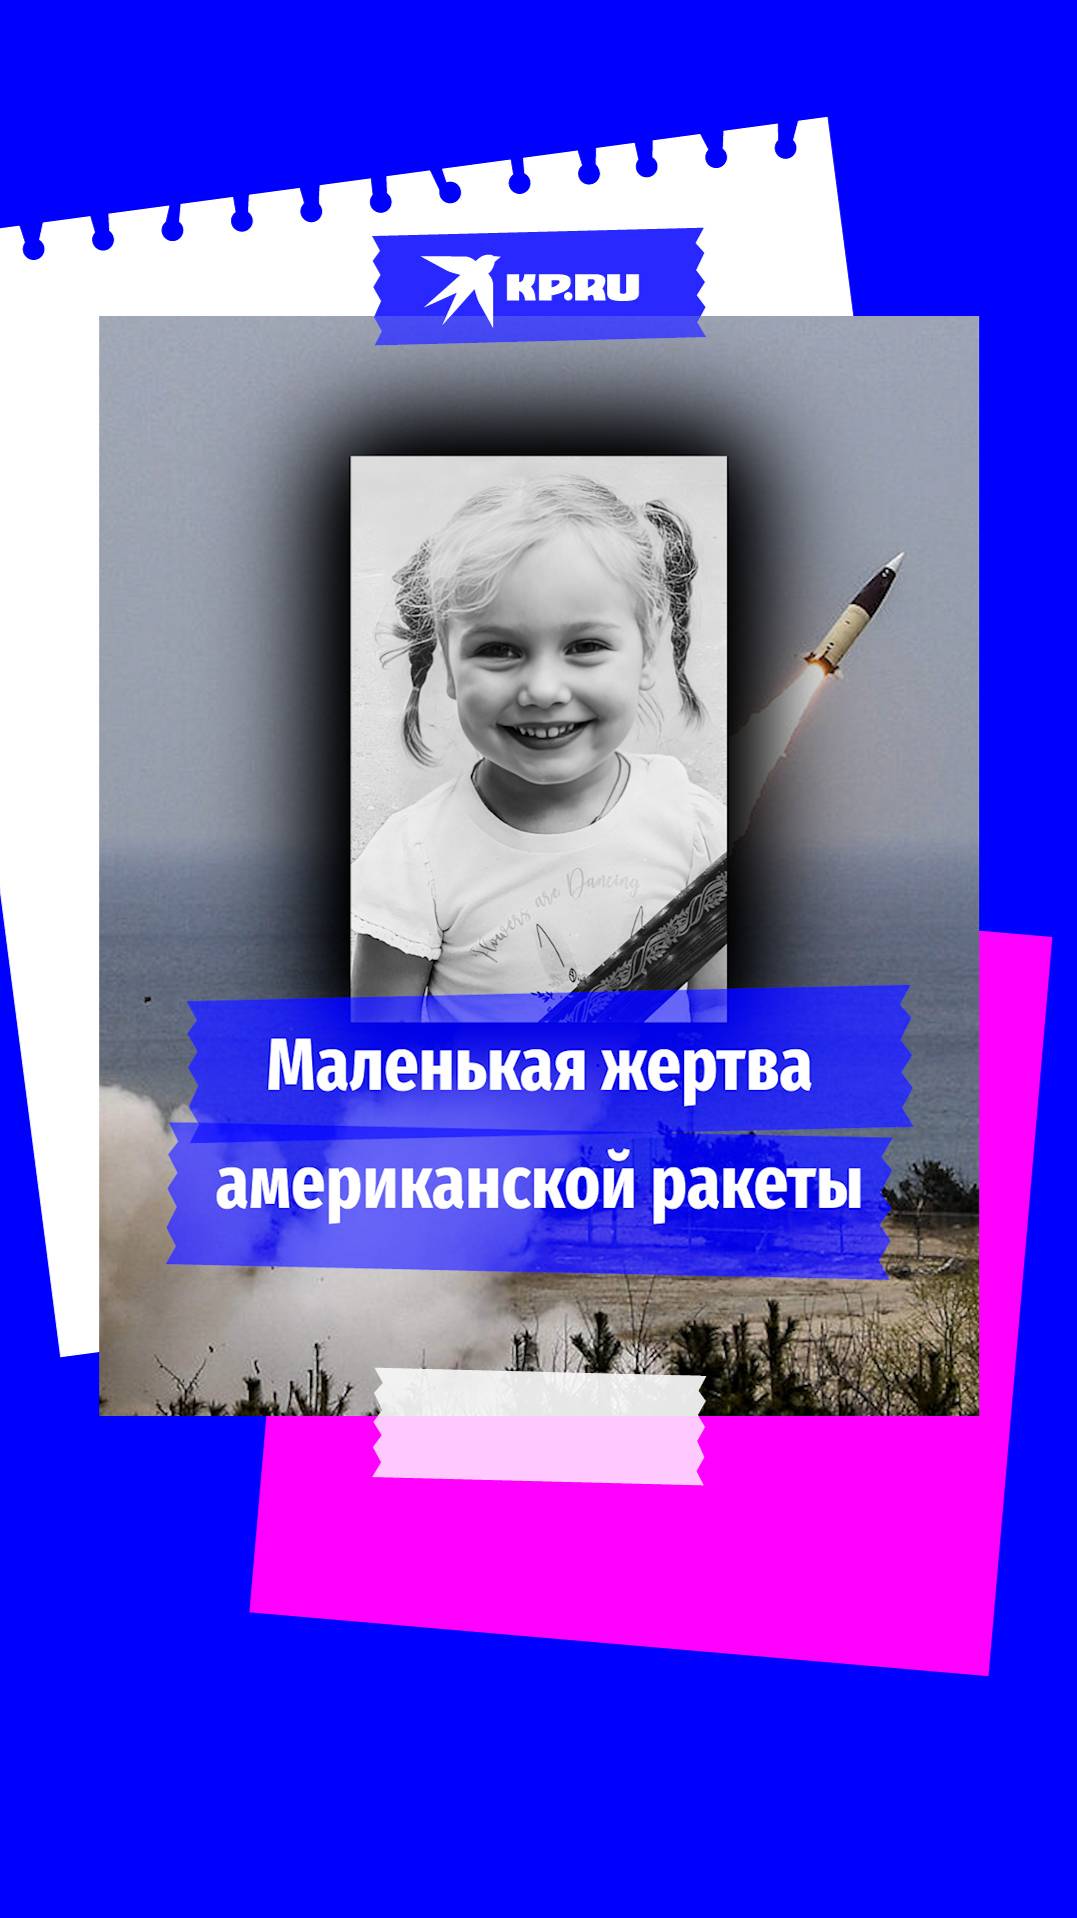 2-летняя Лиза умерла от американской ракеты на пляже в Севастополе